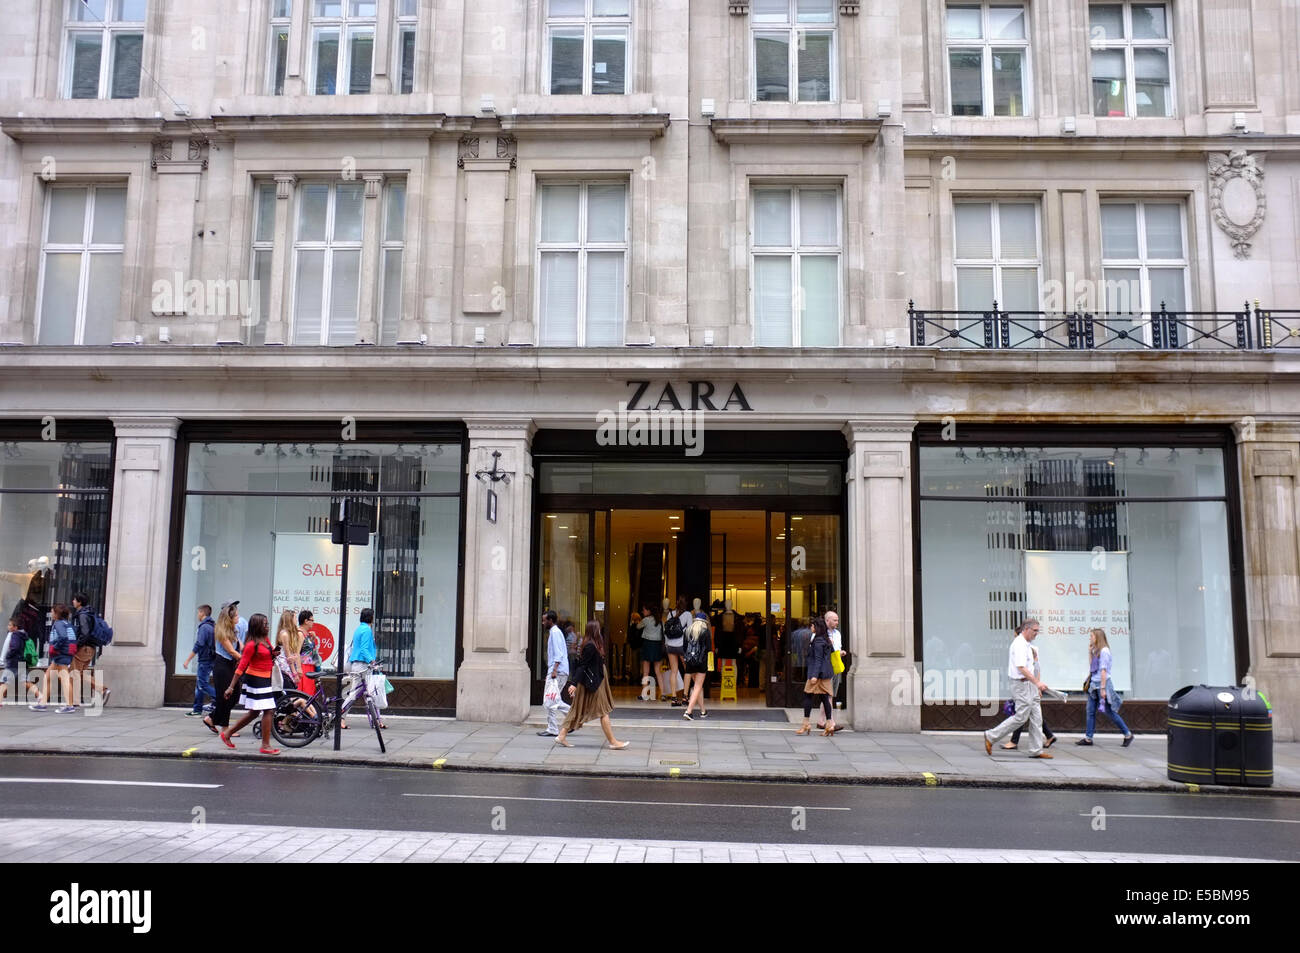 ZARA store on Regent Street, London Stock Photo - Alamy